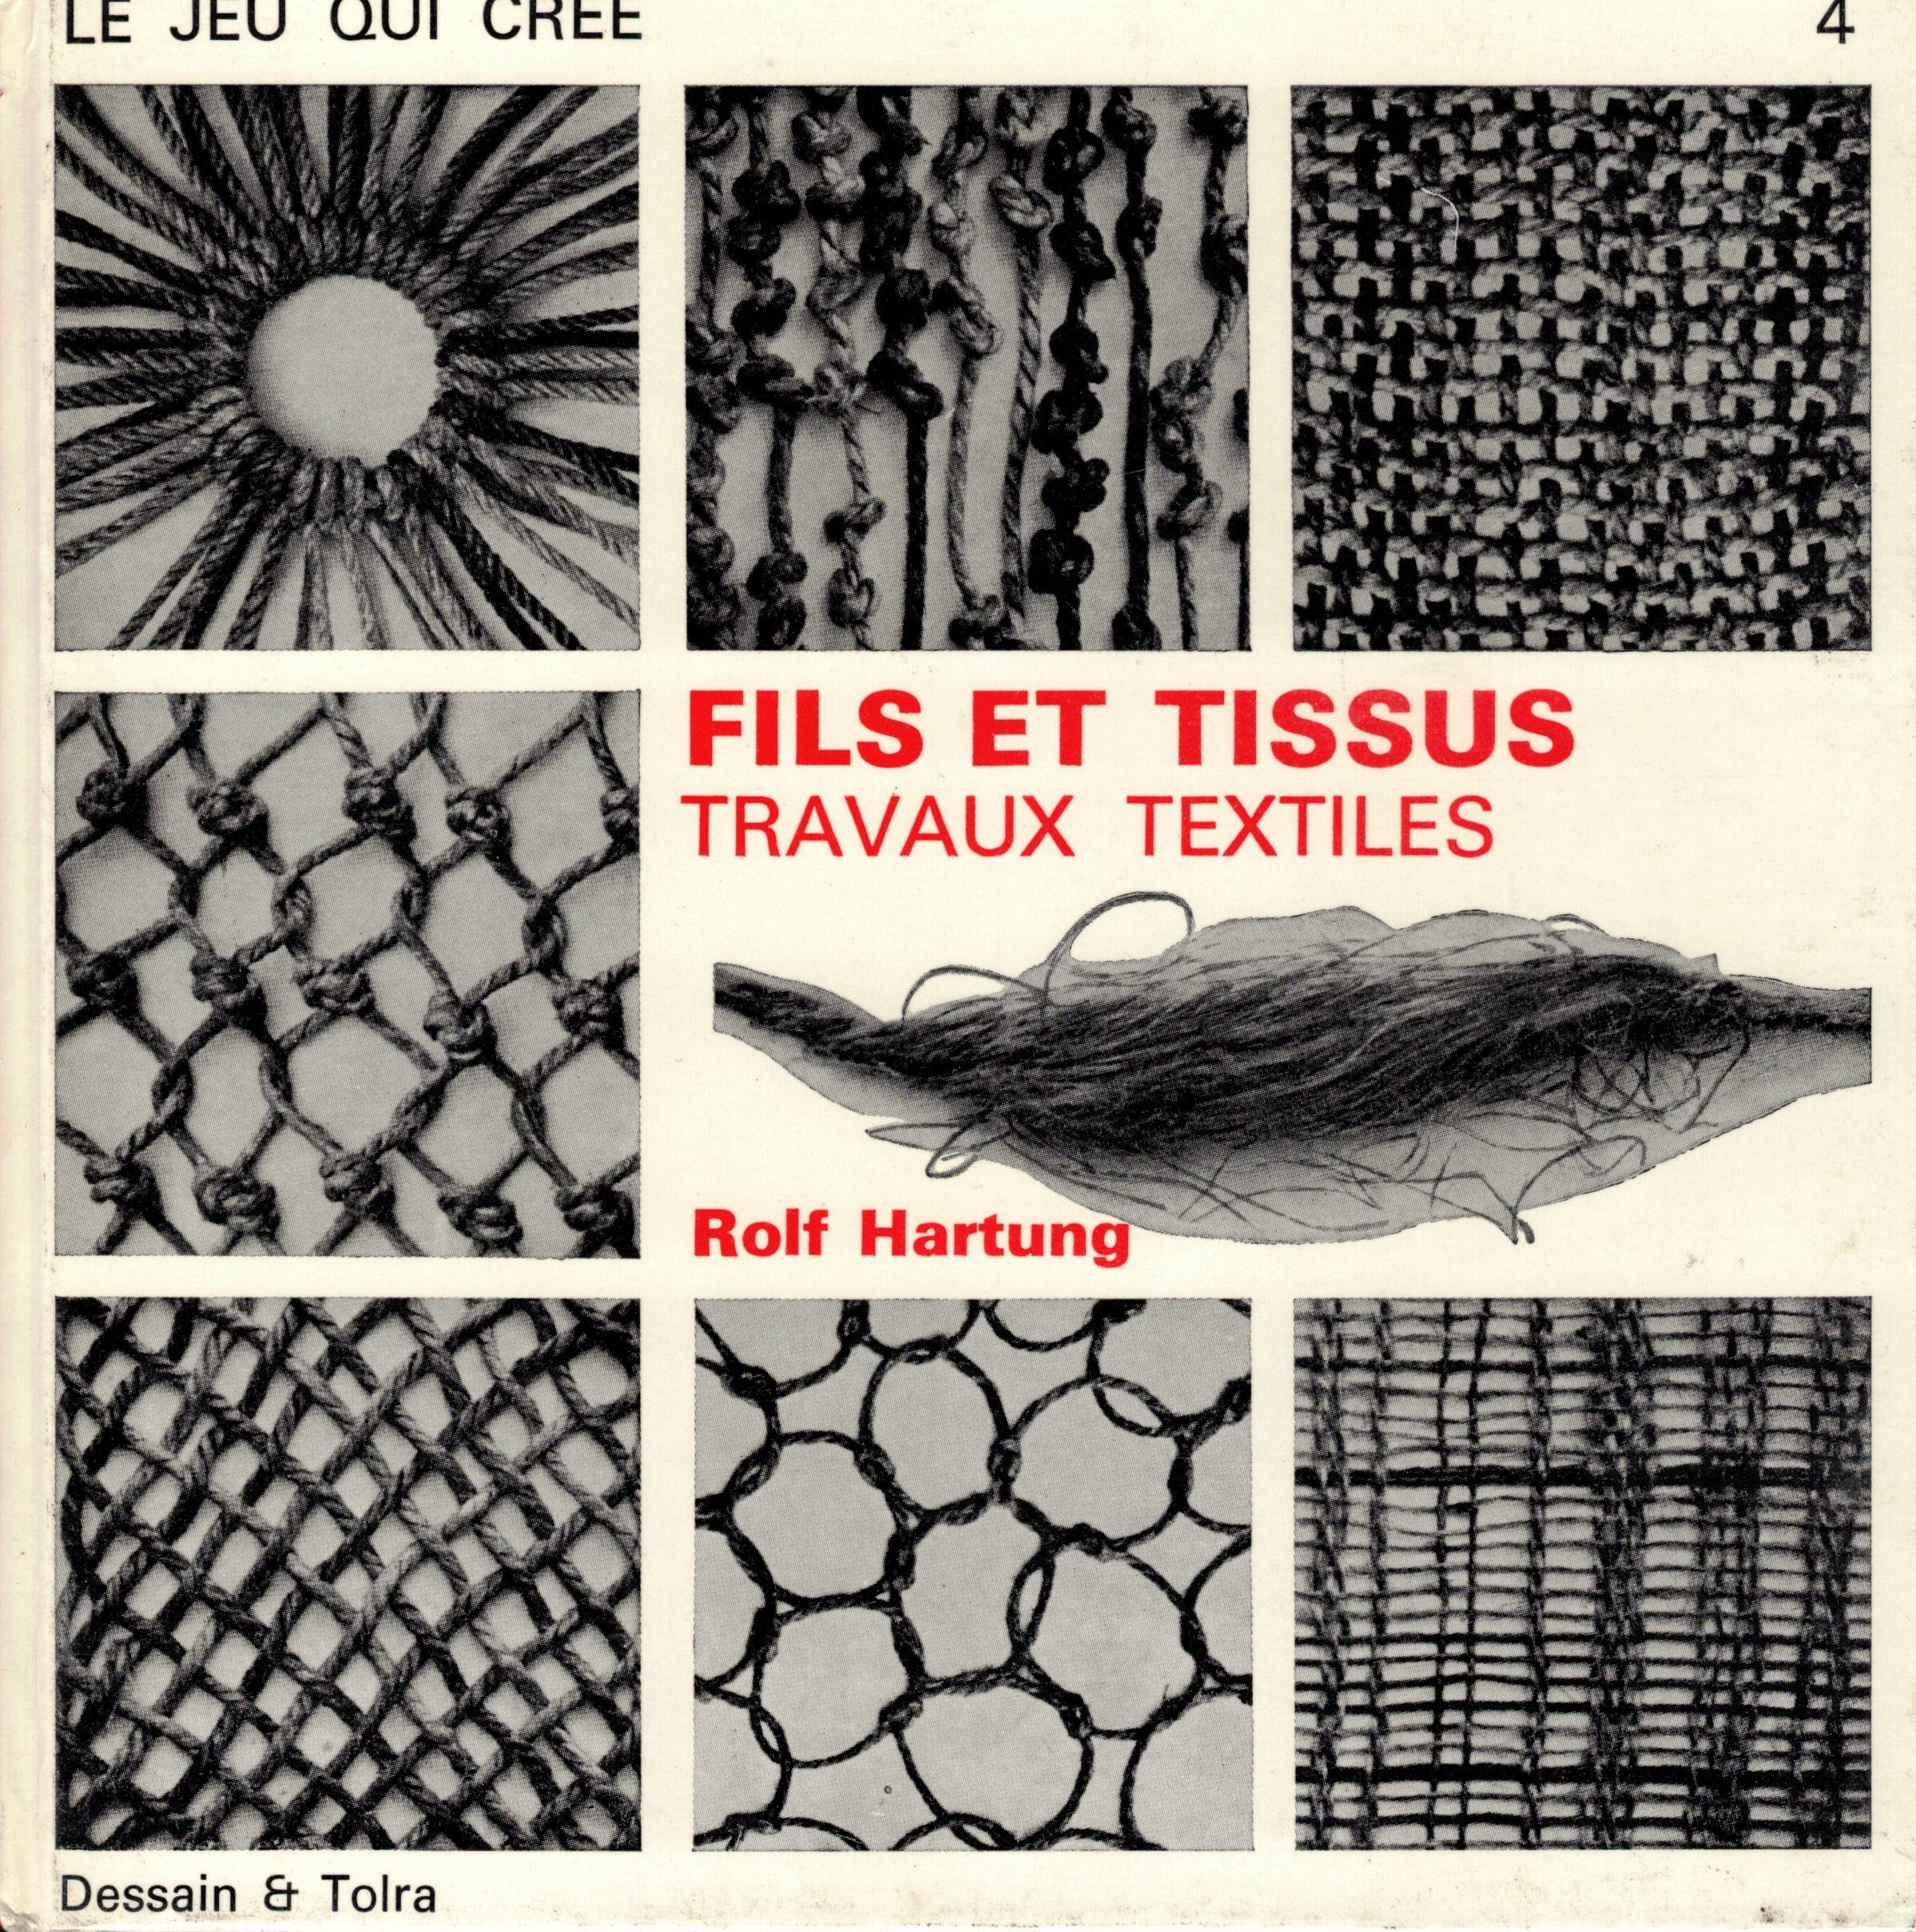 Fils et Tissus Travaux Textiles, Rolf Hartung